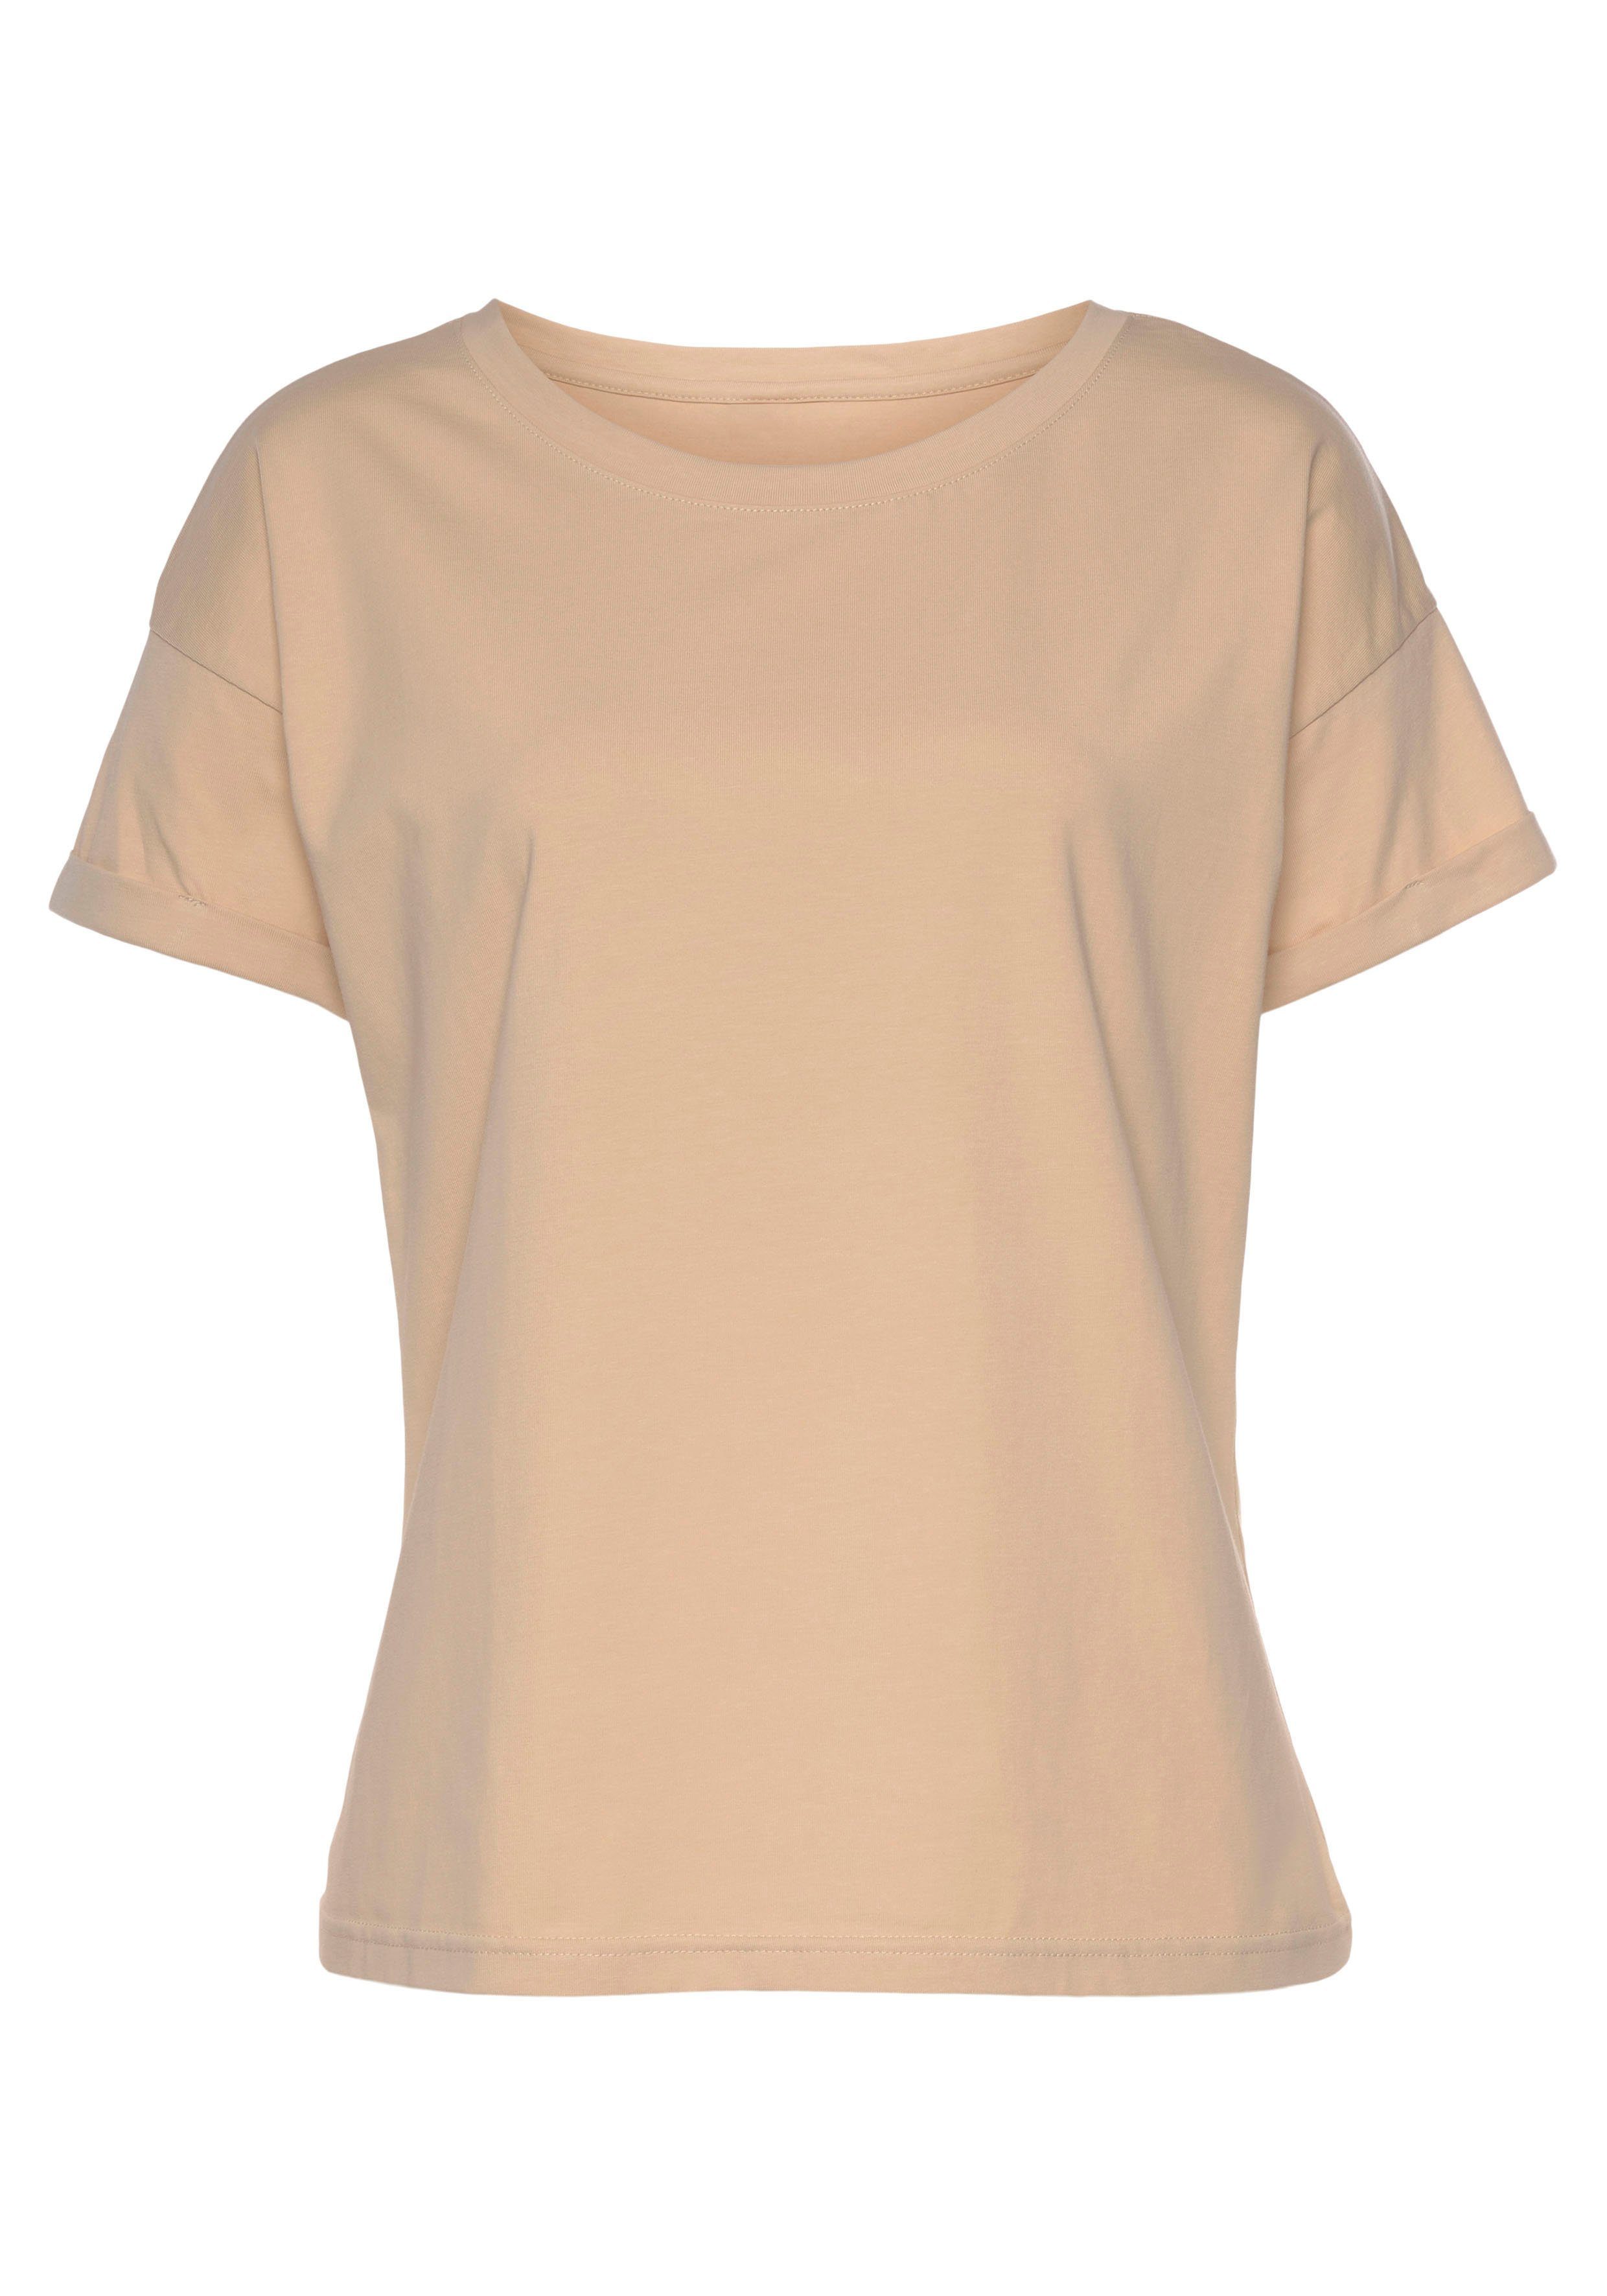 H.I.S T-Shirt mit im nougat Stil, maritimen Loungewear Ärmelaufschlag